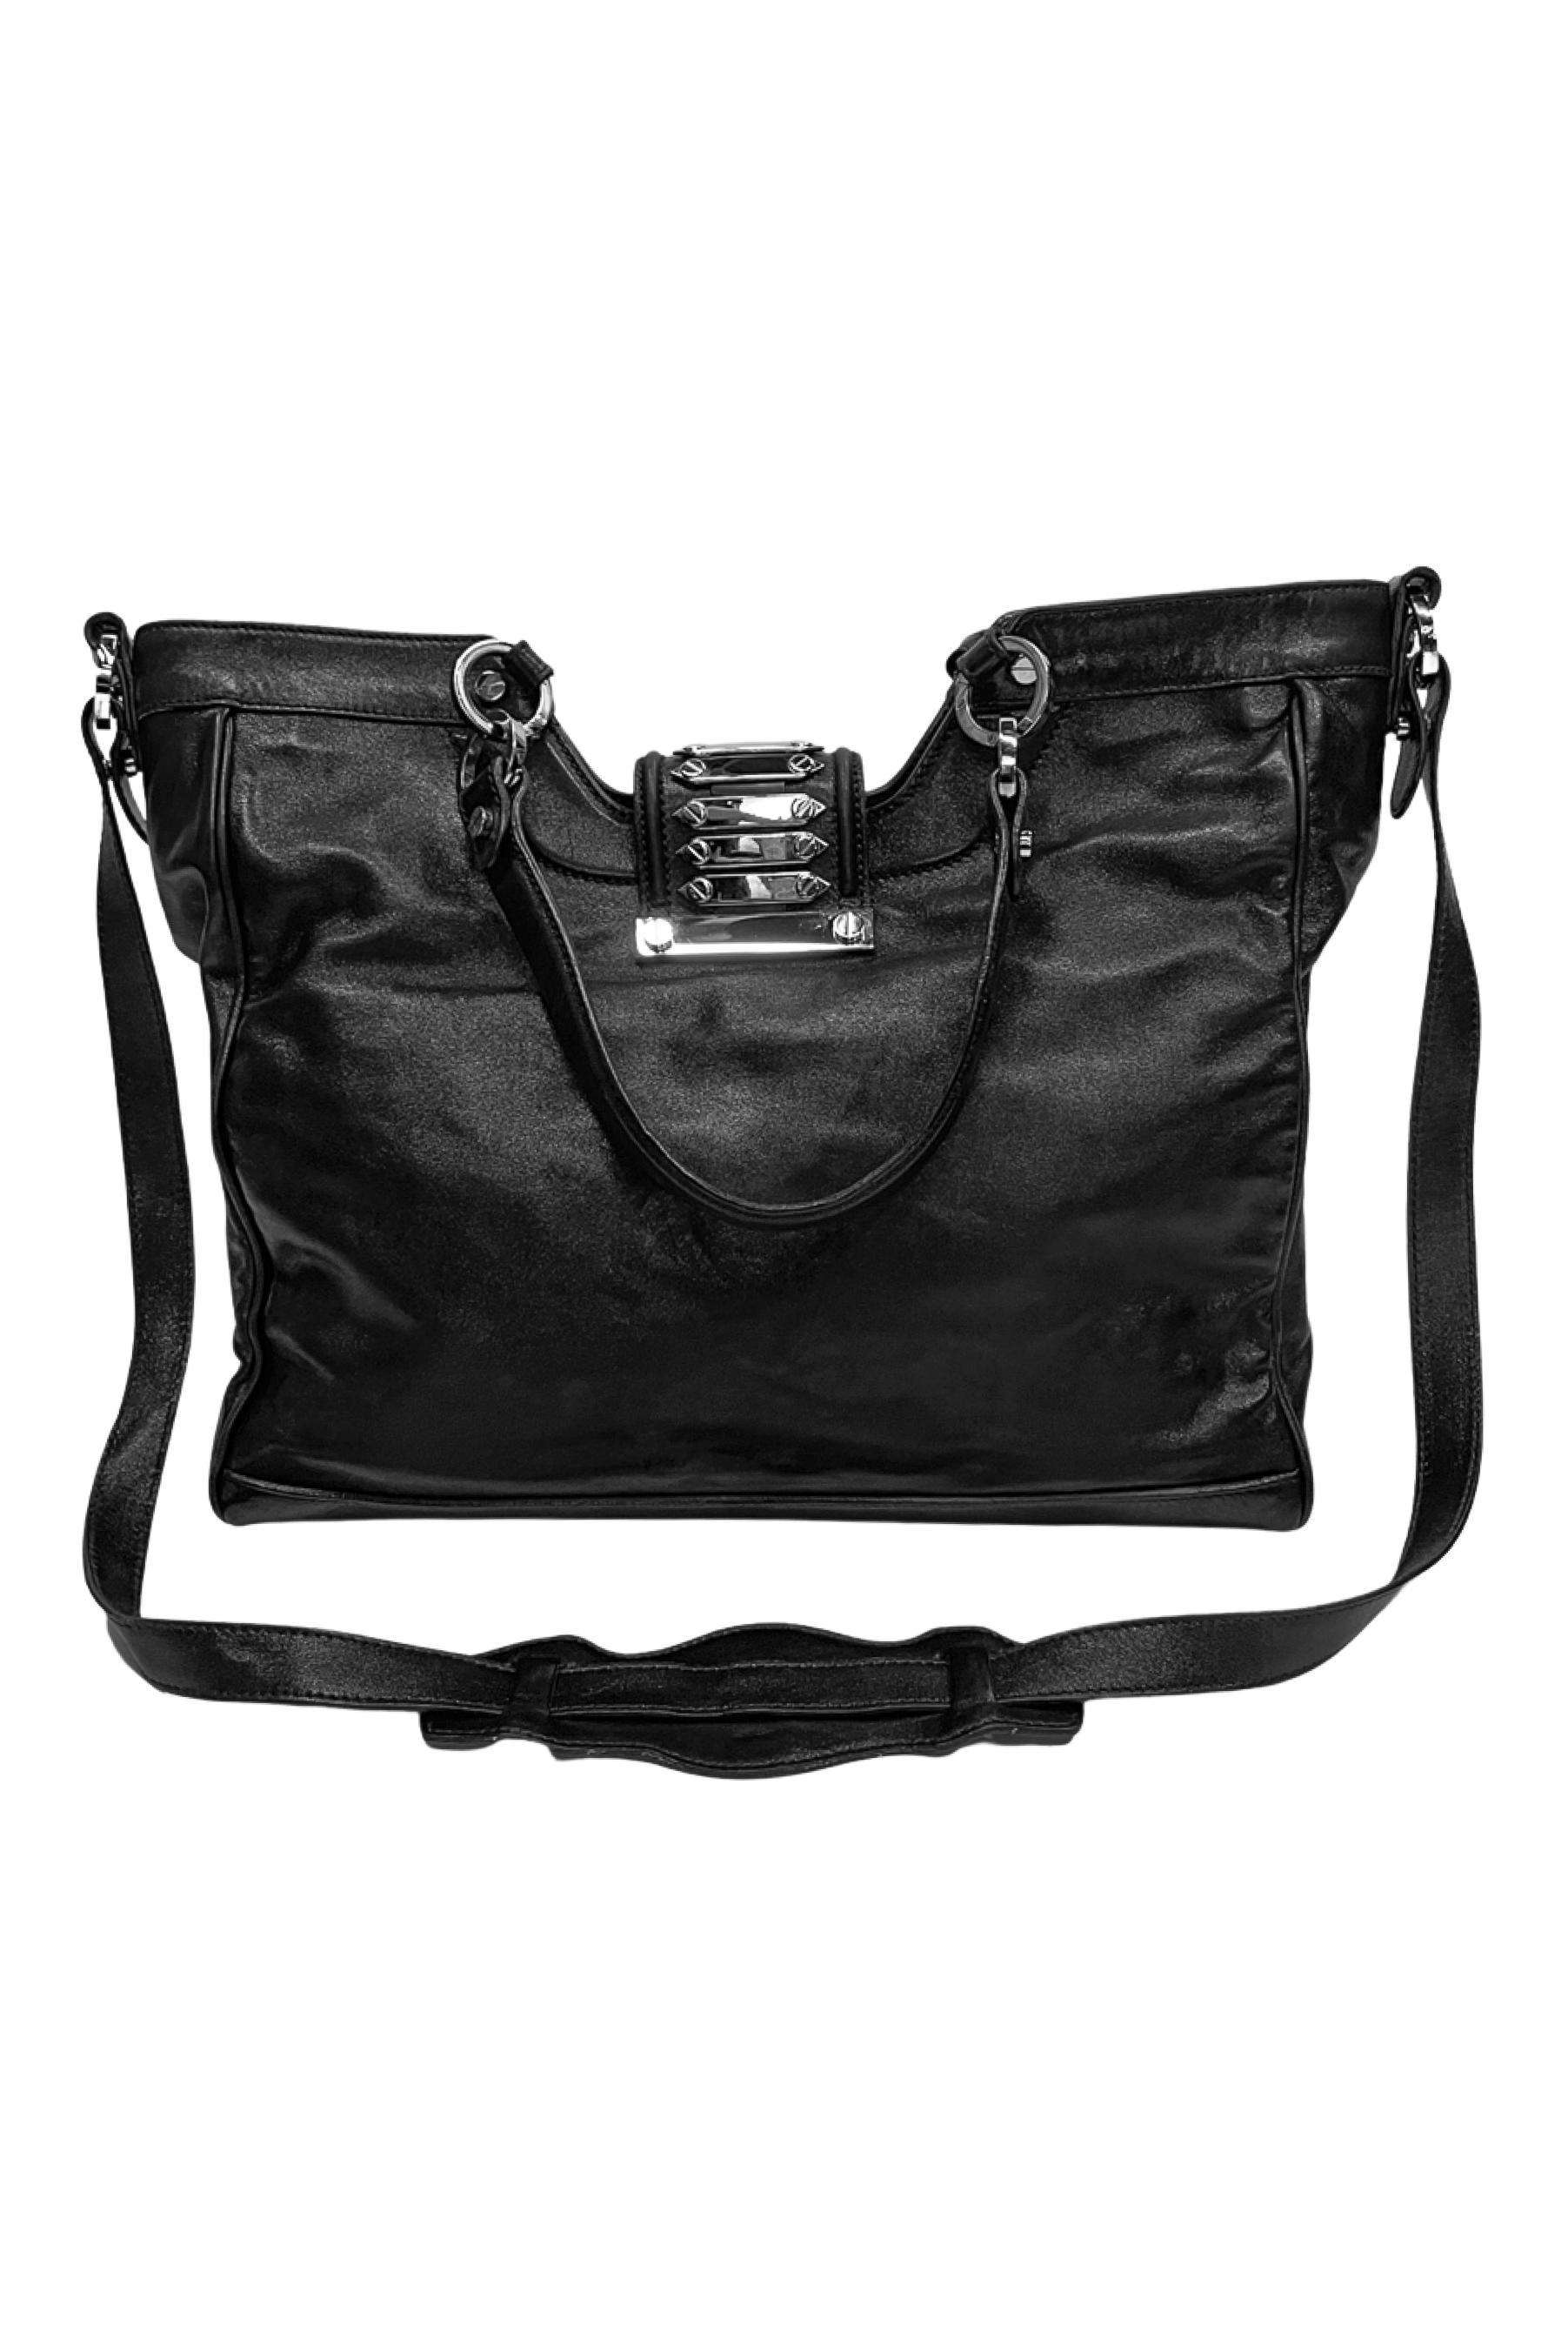 Balenciaga by Nicolas Ghesquiere Black Leather & Studded Chrome Bag 2007 For Sale 2